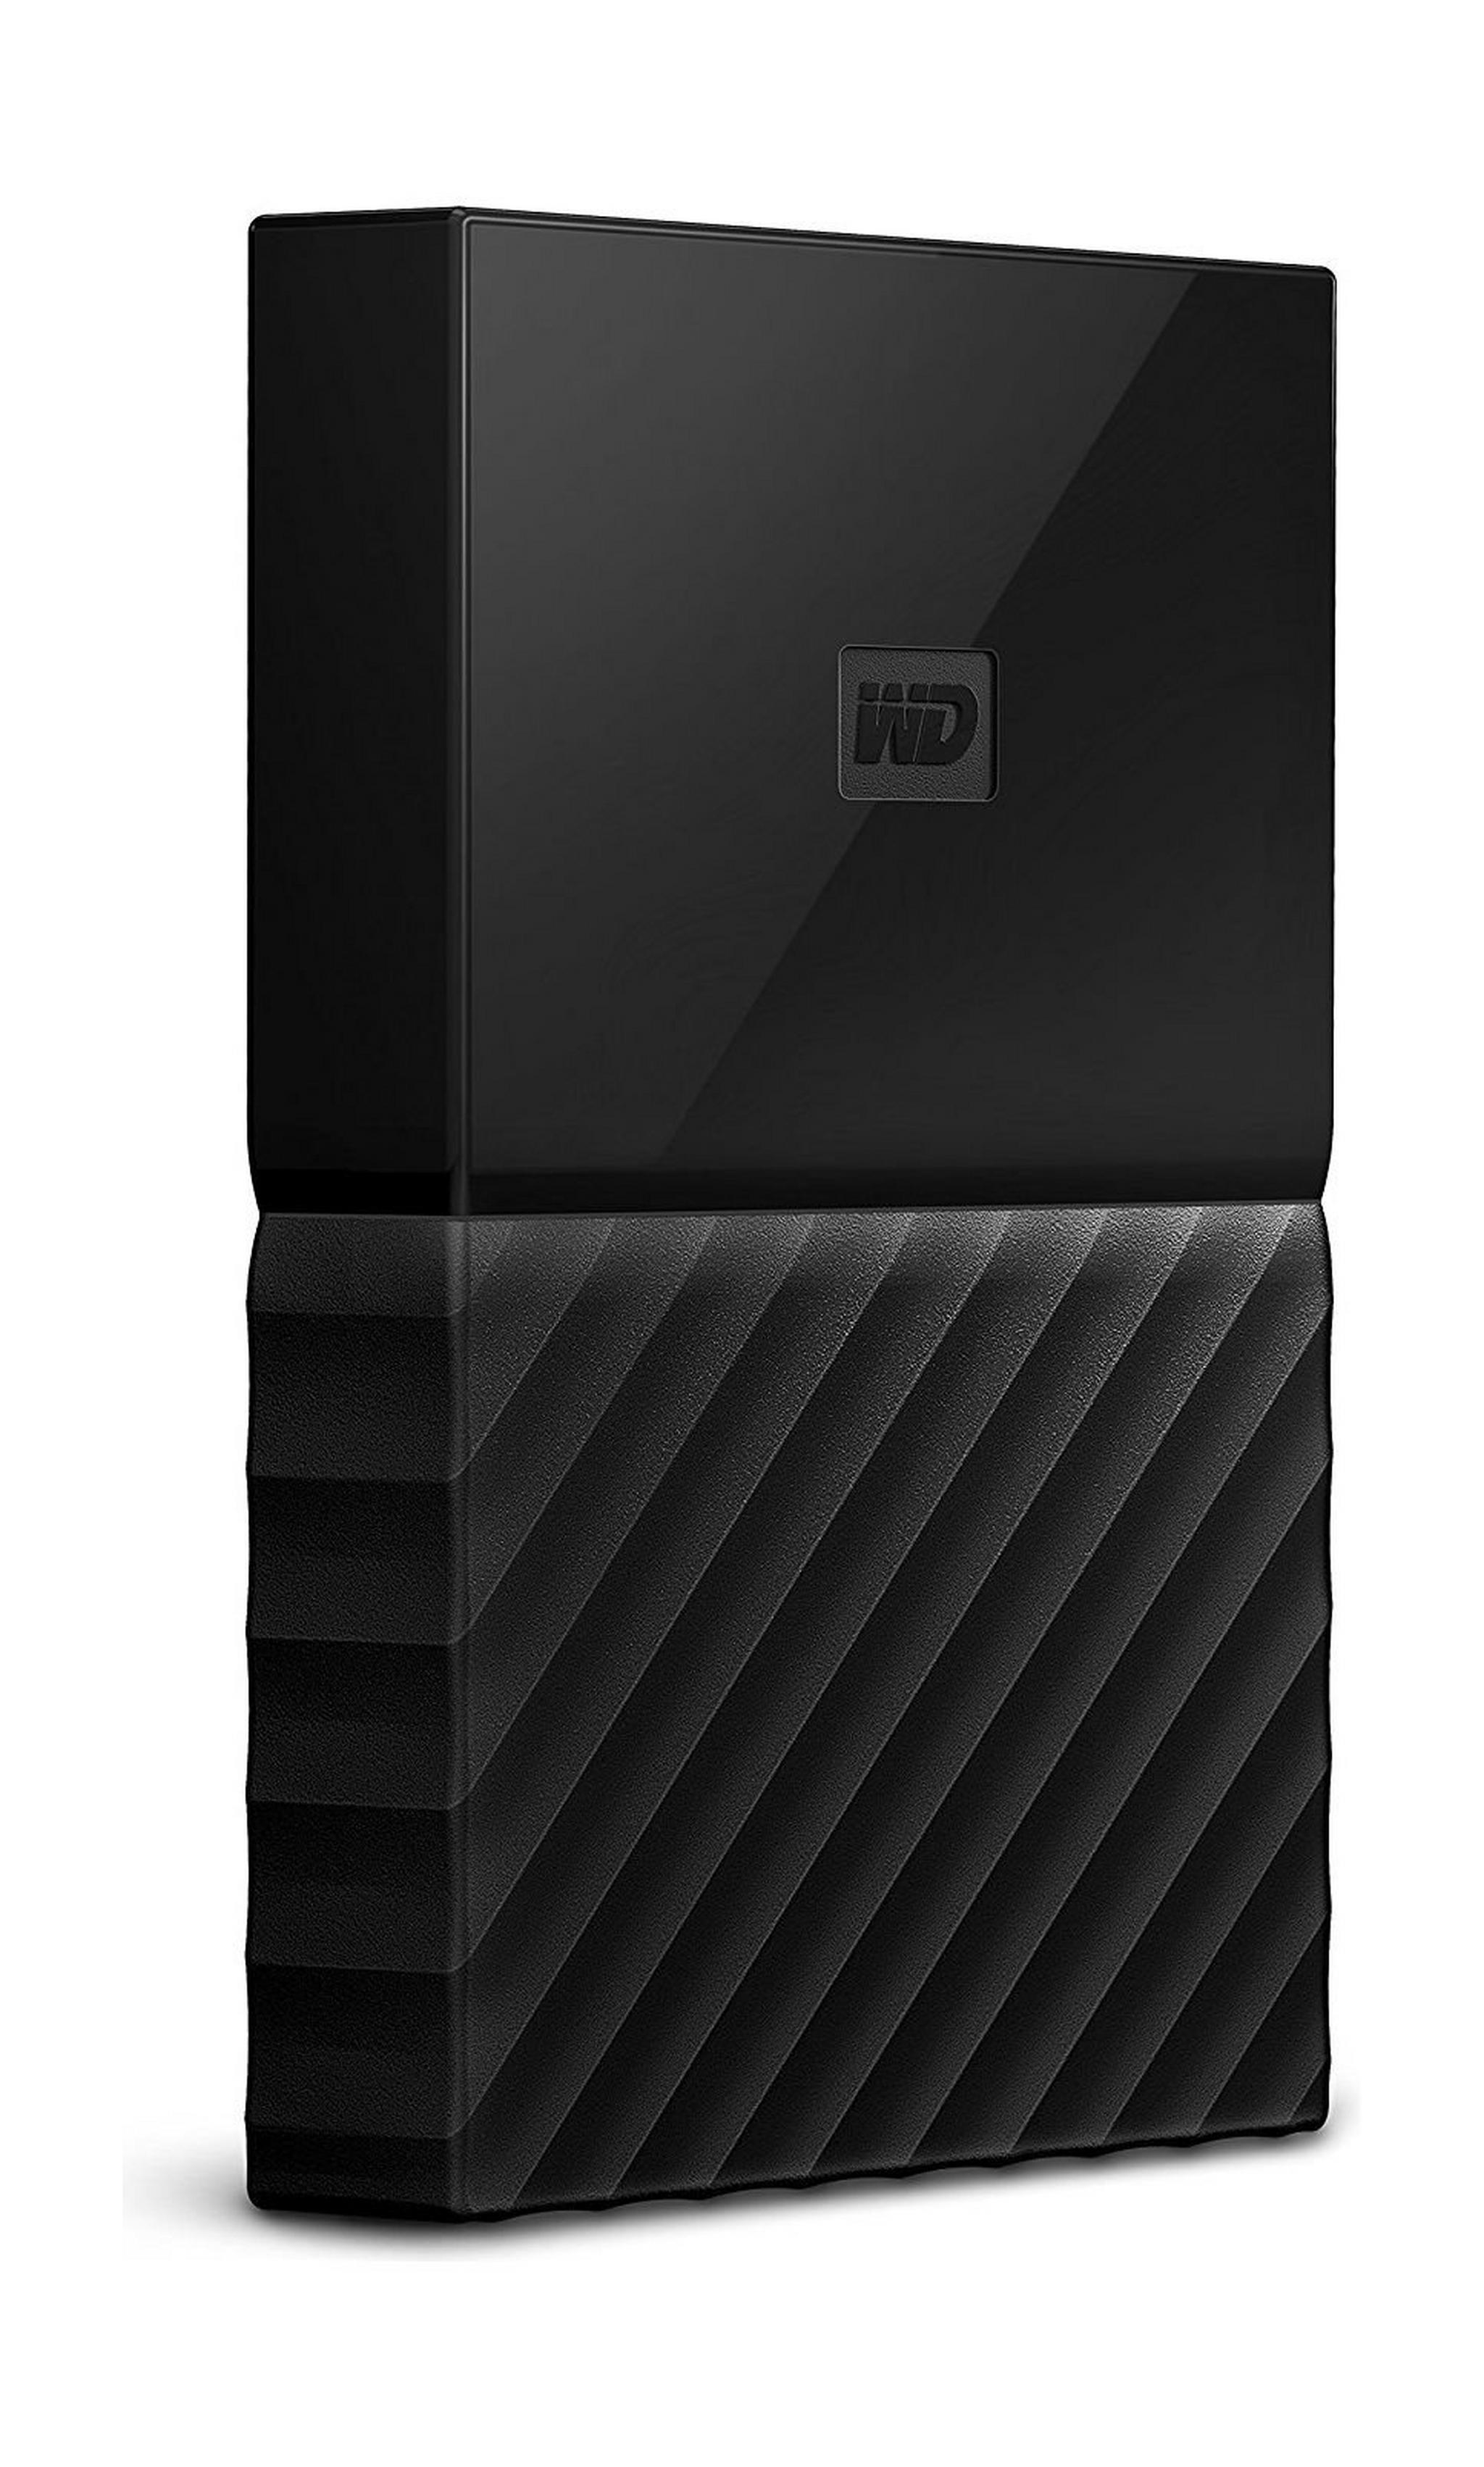 WD 1TB Black My Passport for Mac Portable External Hard Drive - USB 3.0 (WDBFKF0010BBK)